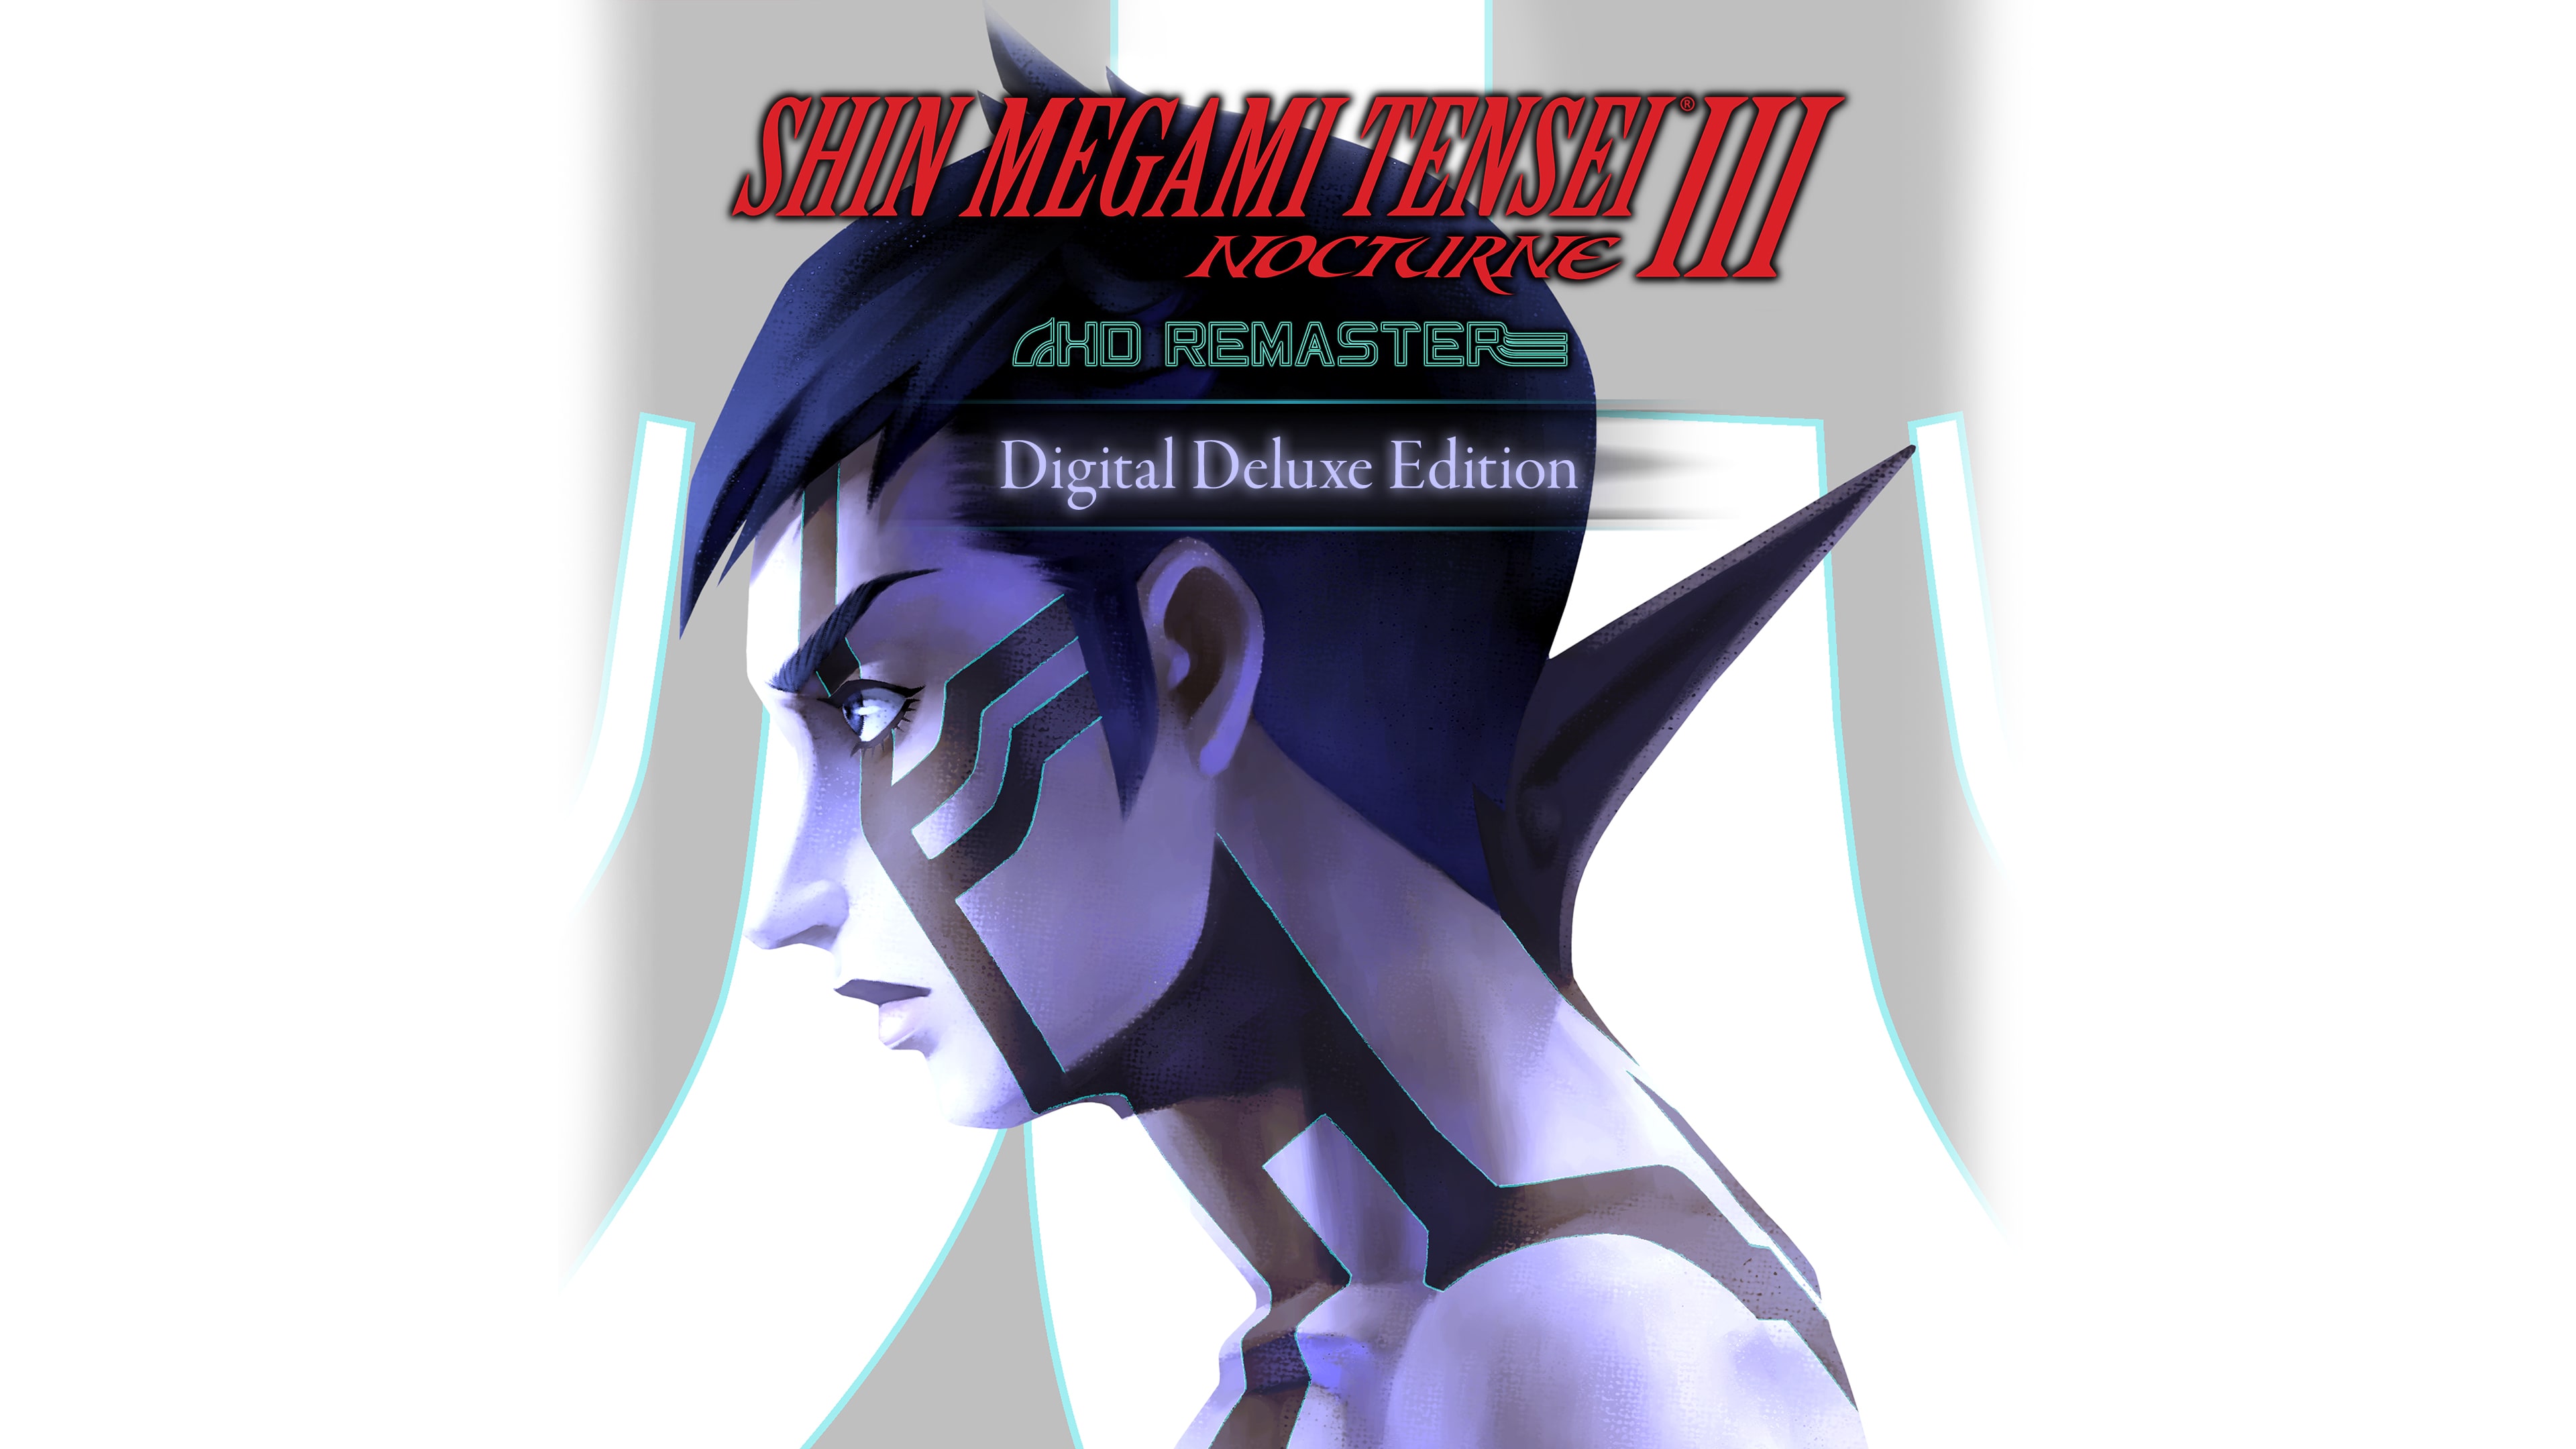 Digital Deluxe Edition